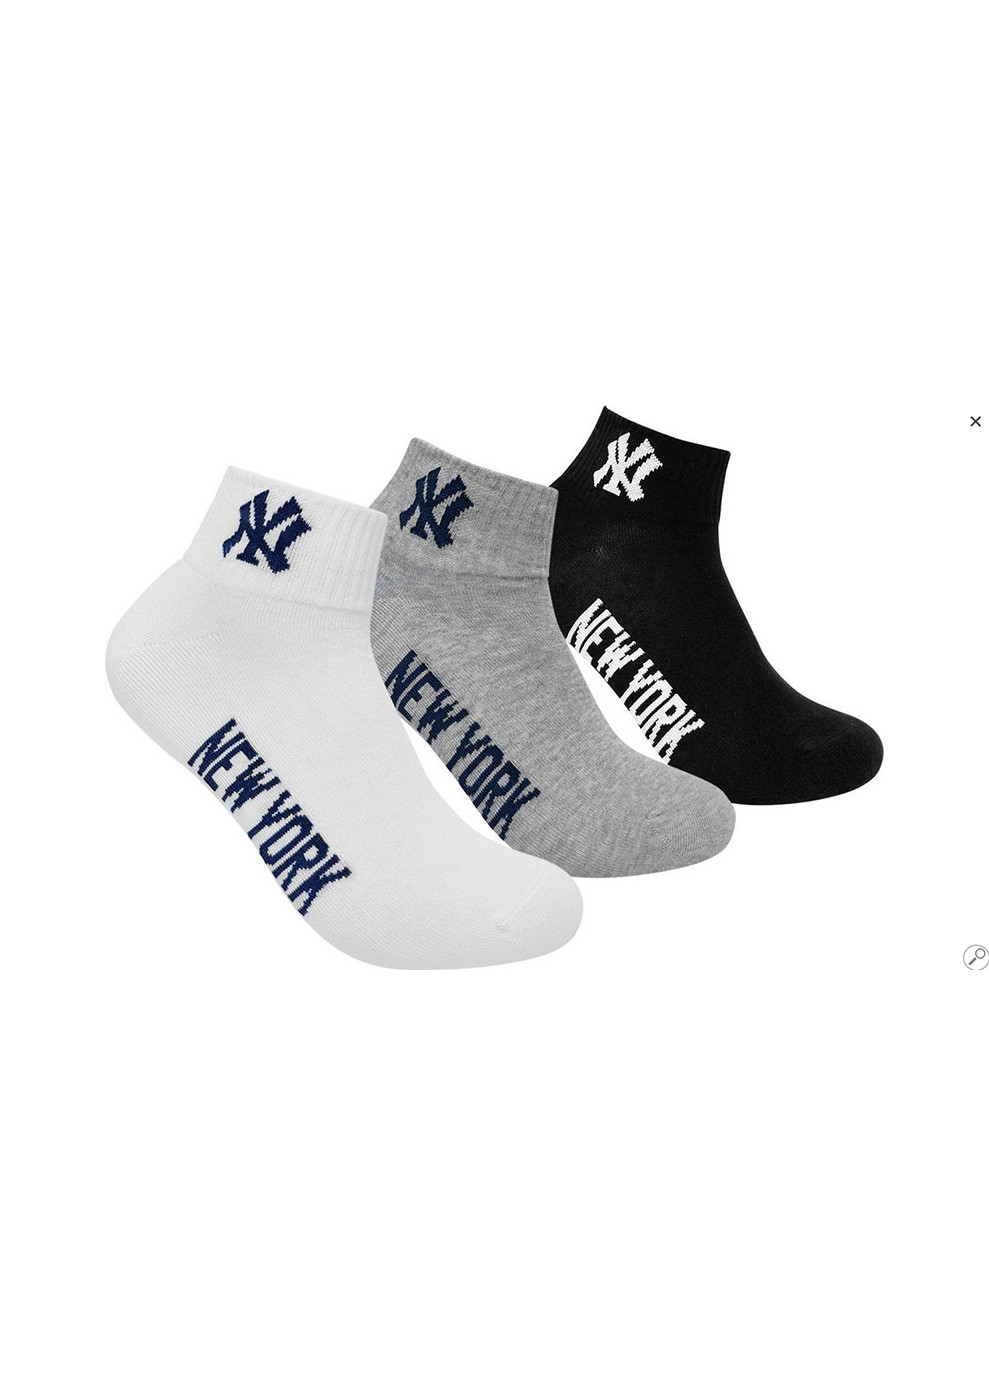 Шкарпетки Quarter 3-pack 43-46 black/white/gray 15100003-1003 New York Yankees (253684186)